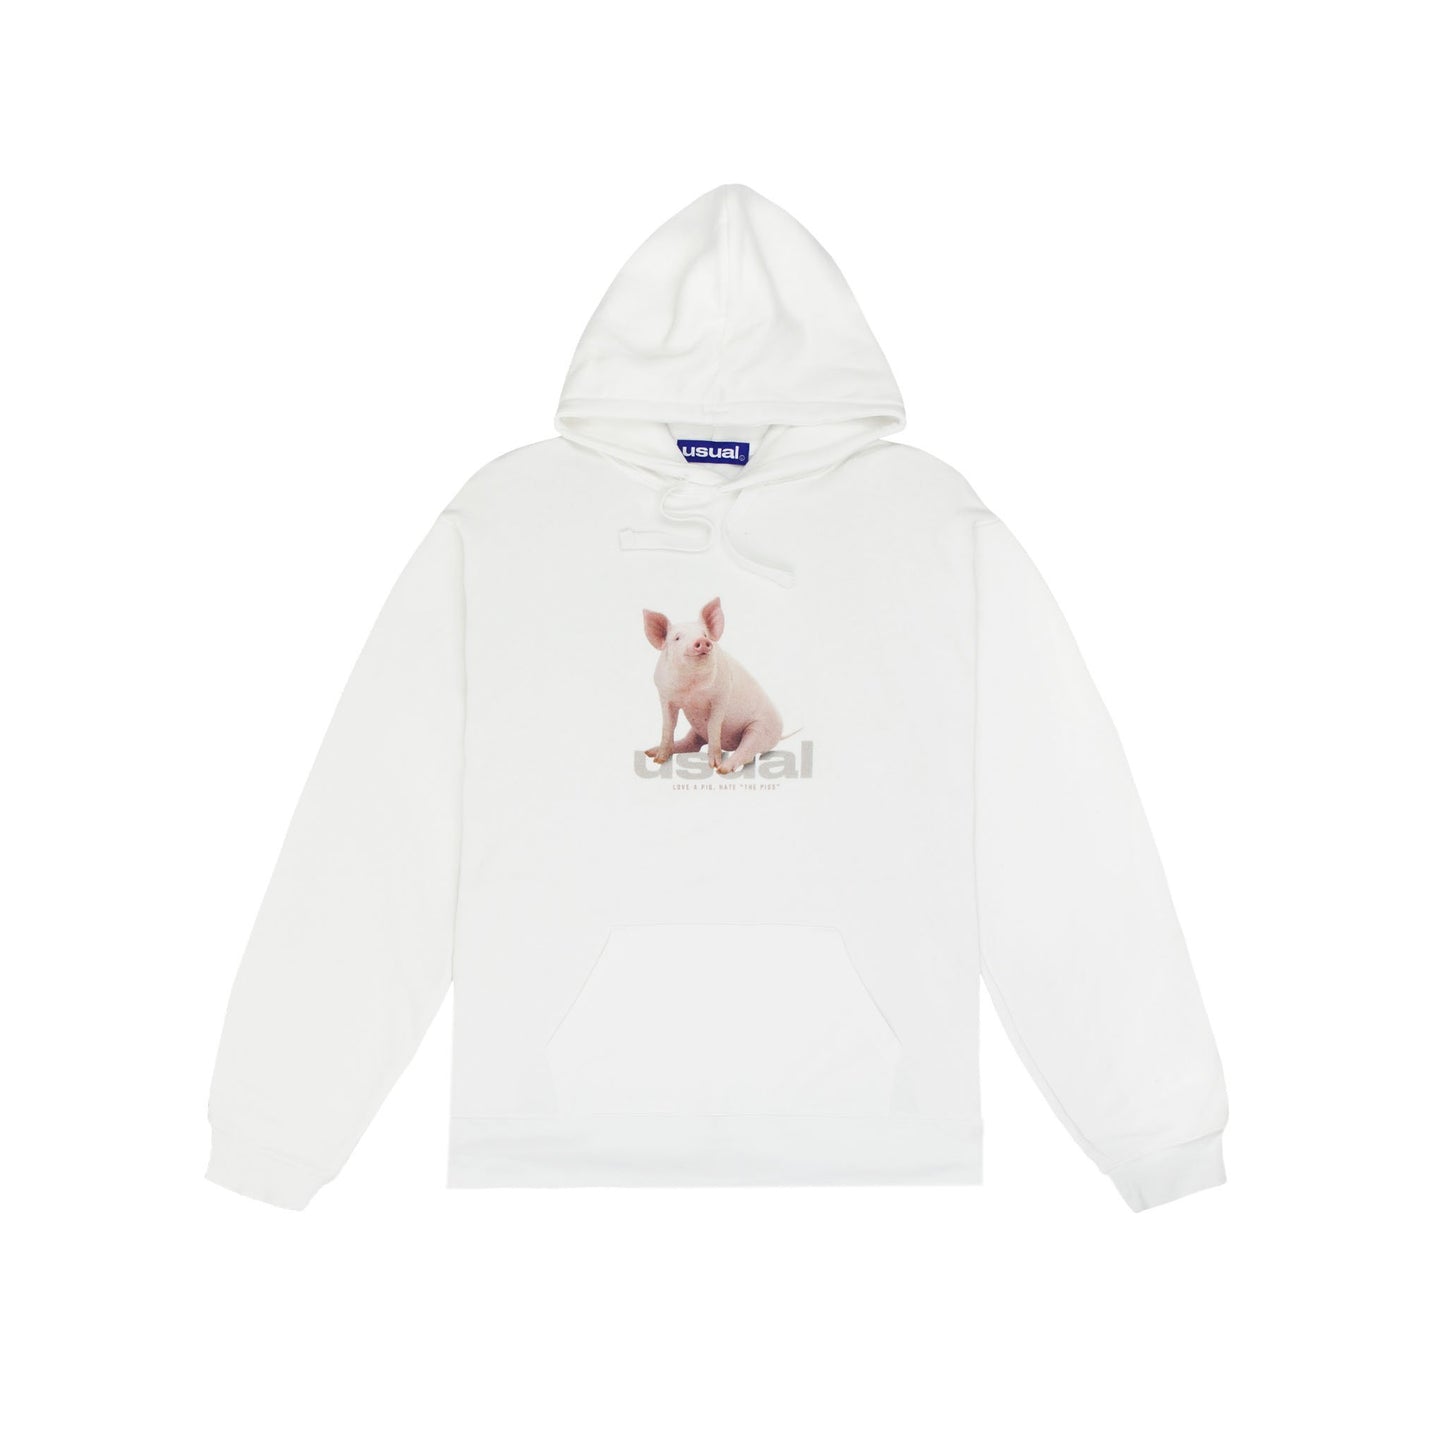 Usual - Piggy Hooded Sweatshirt White